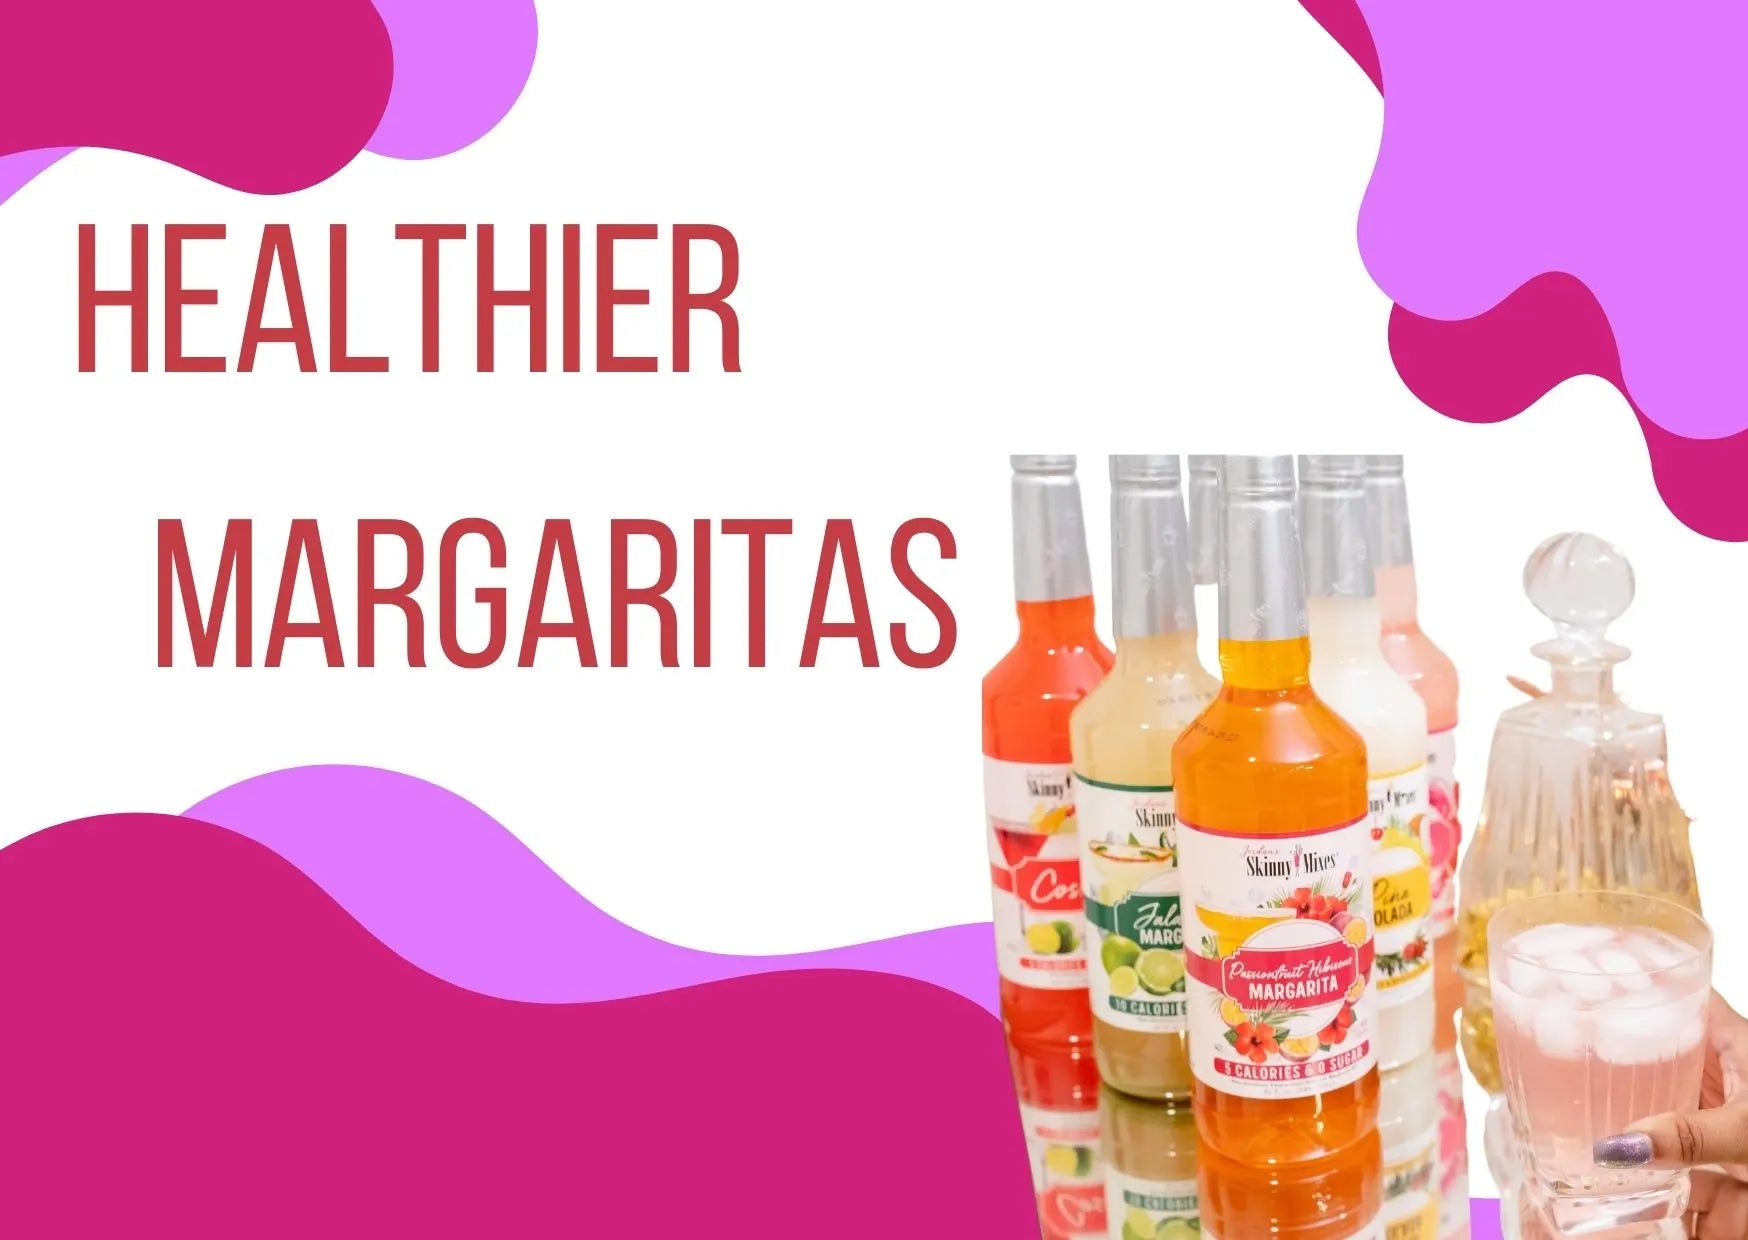 Healthier Margaritas